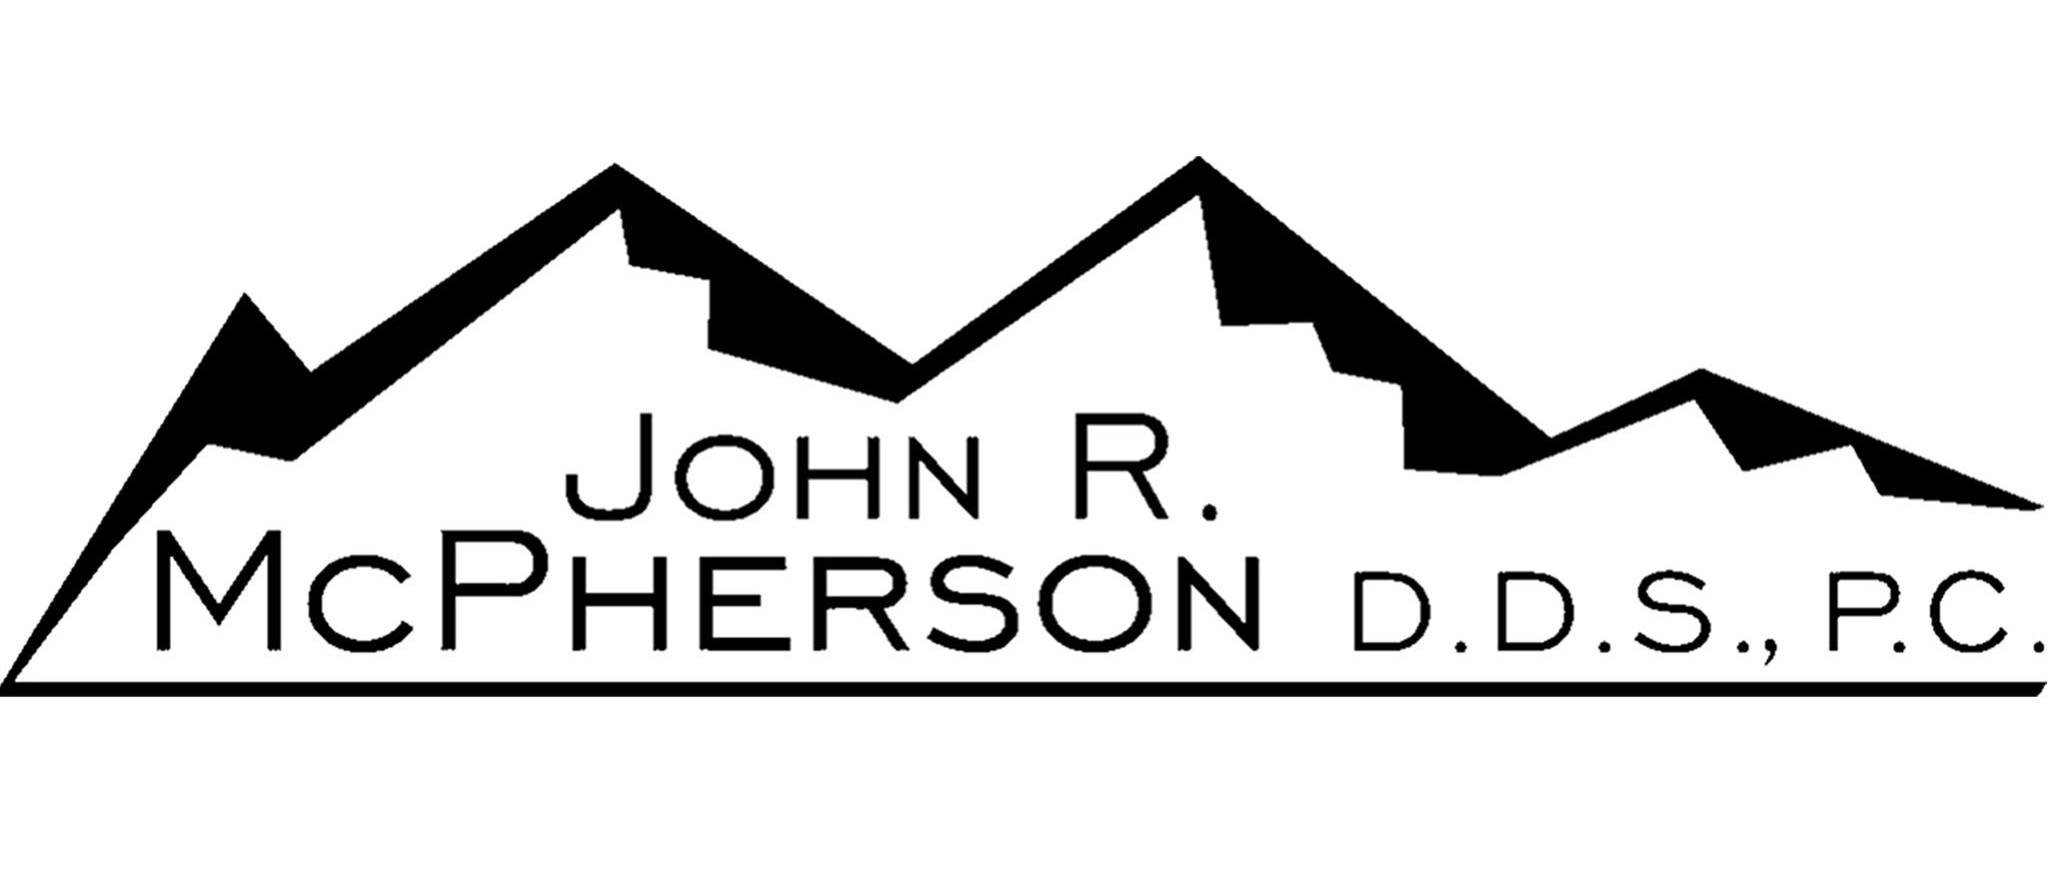 250 John R. McPherson D.D.S. logo.jpg